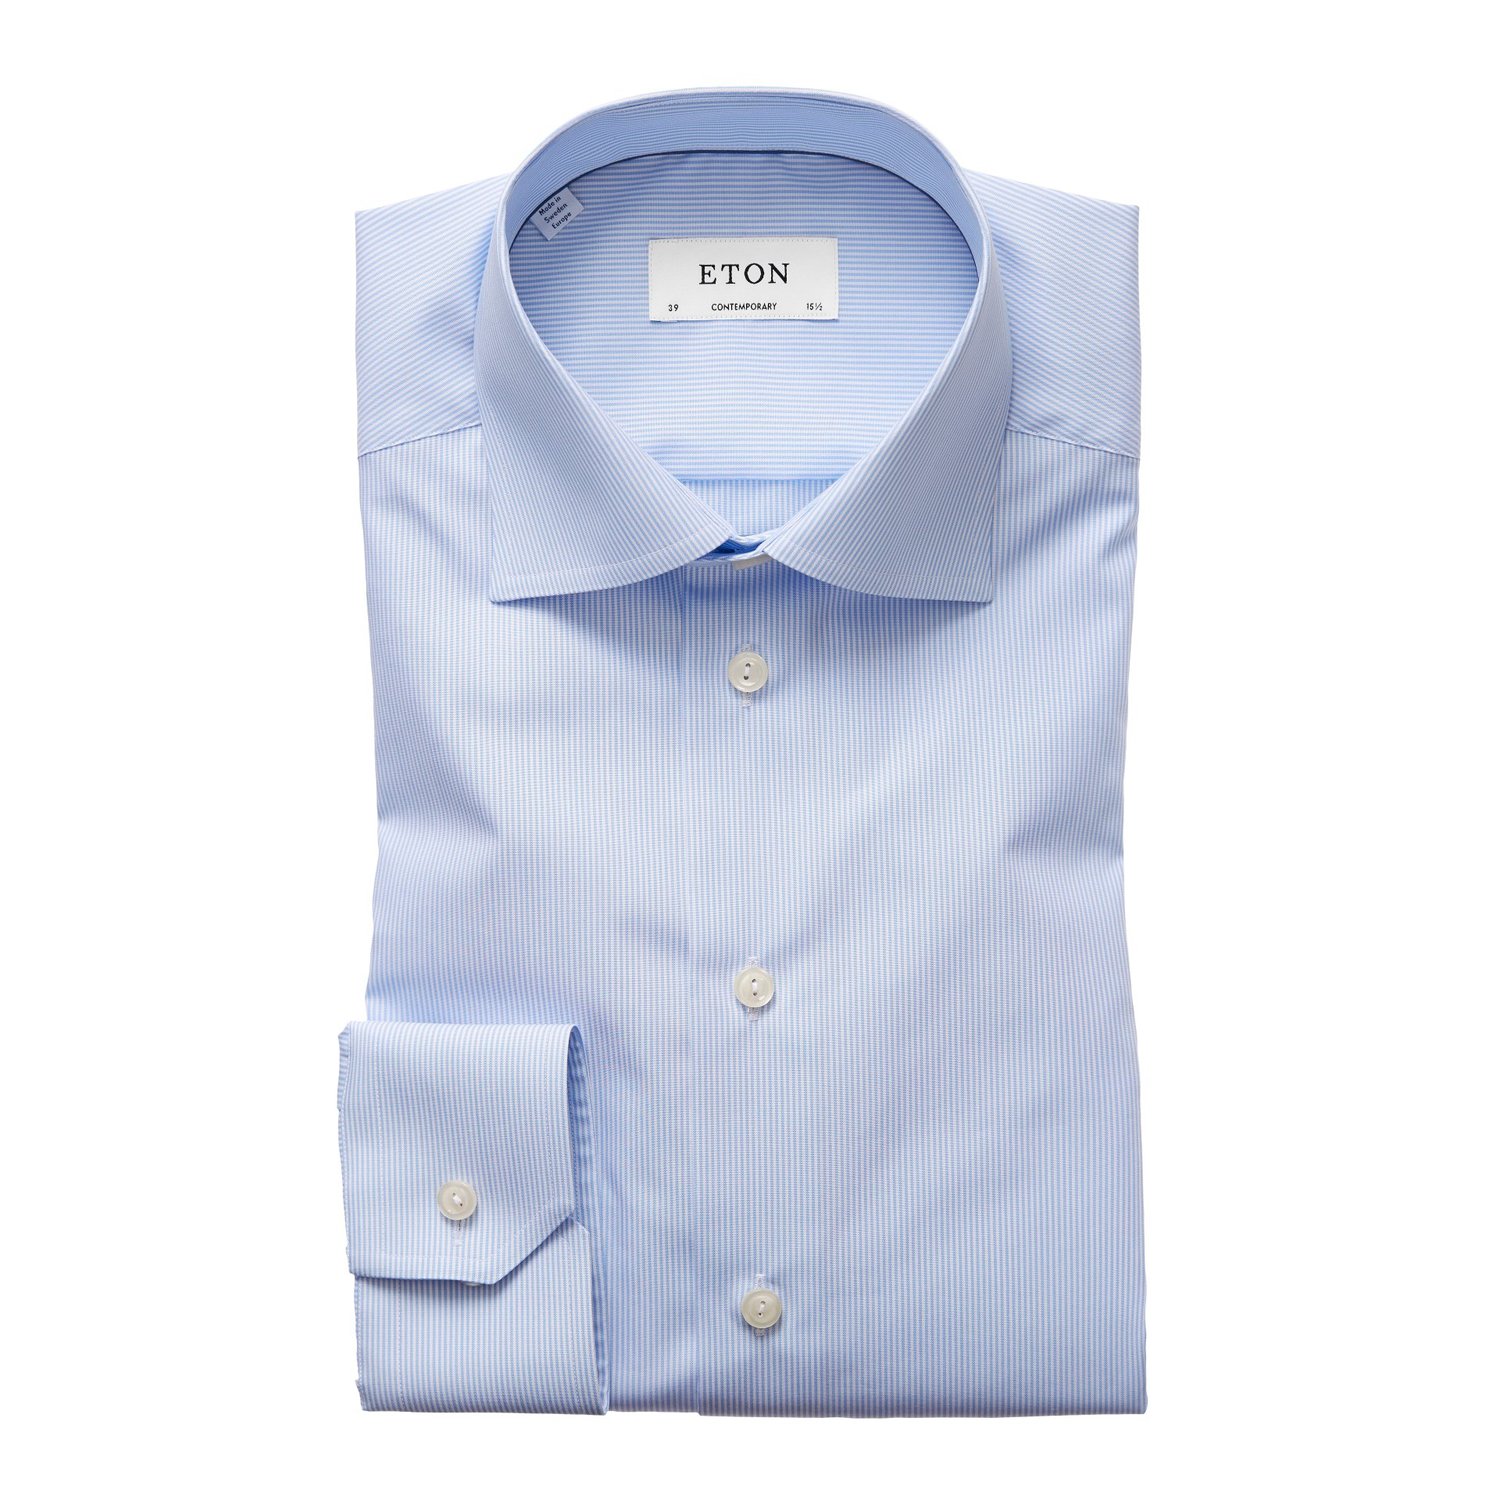 Met name Toestemming belasting Eton Poplin Shirt Slim Fit in Light Blue Stripes — Uomo San Francisco |  Luxury European Menswear